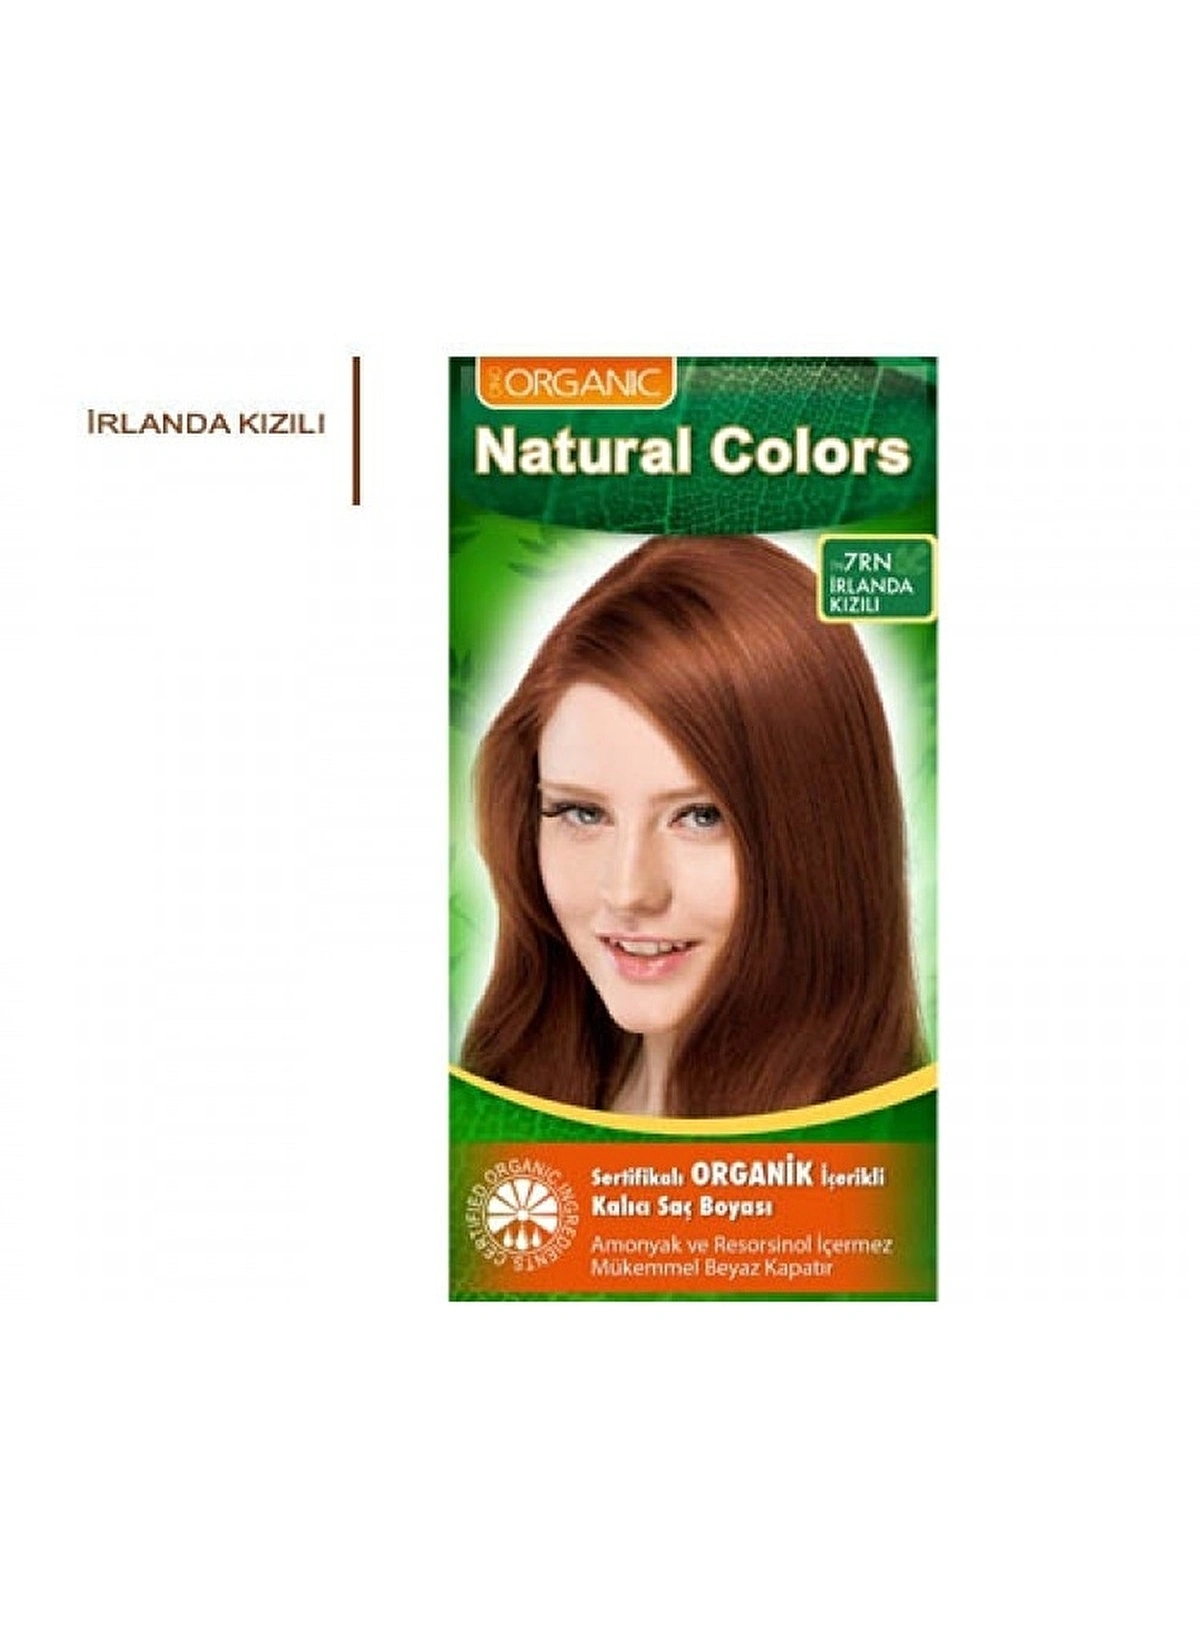 Natural Colors - Natural Colors Organik İçerikli Saç Boyası 7RN İrlanda Kızılı